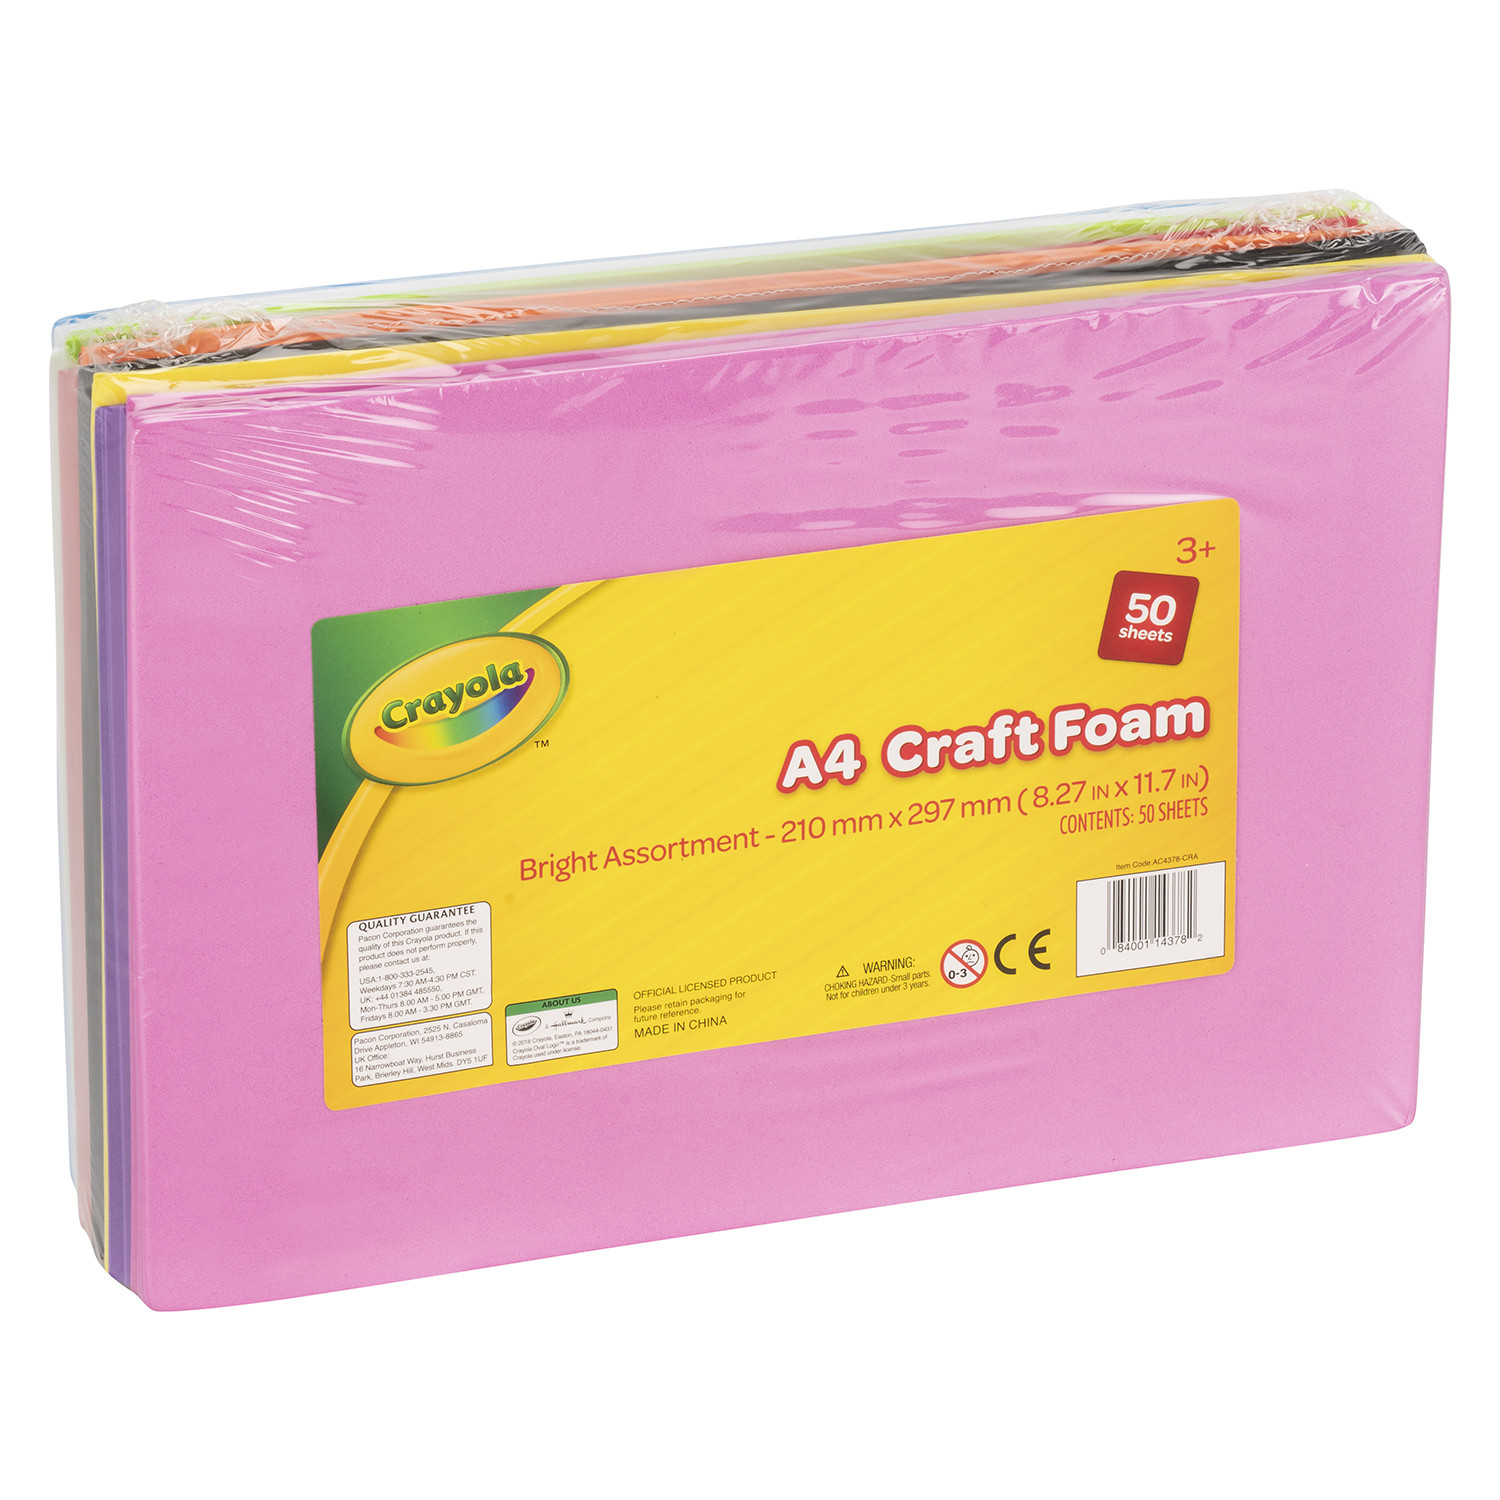 Crayola Bright A4 Craft Foam 50 Pack Image 1